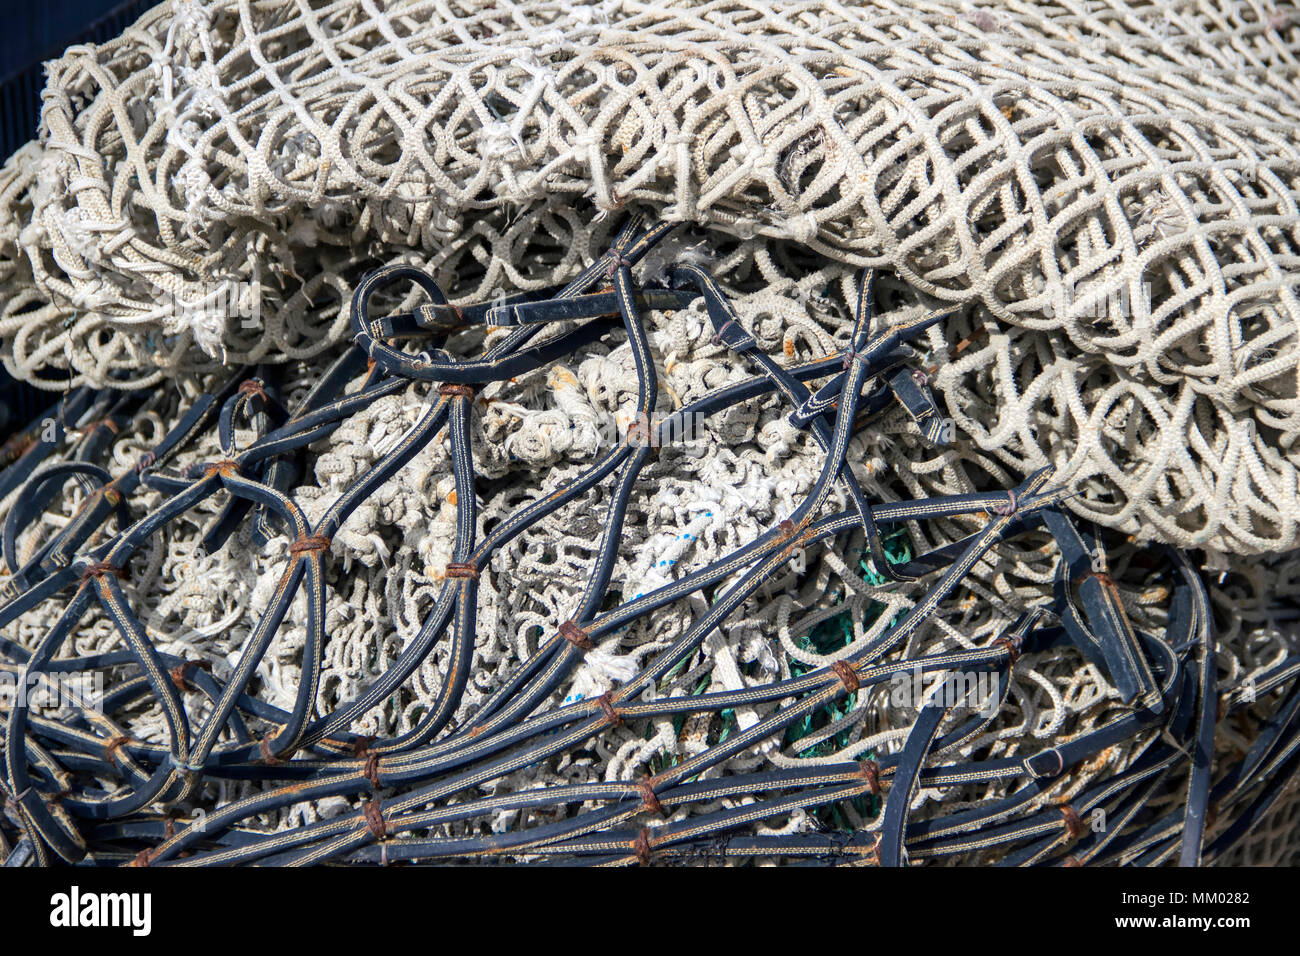 Porec Harbor, Istria, Croatia - Piles of colorful fishing net and rope Stock Photo